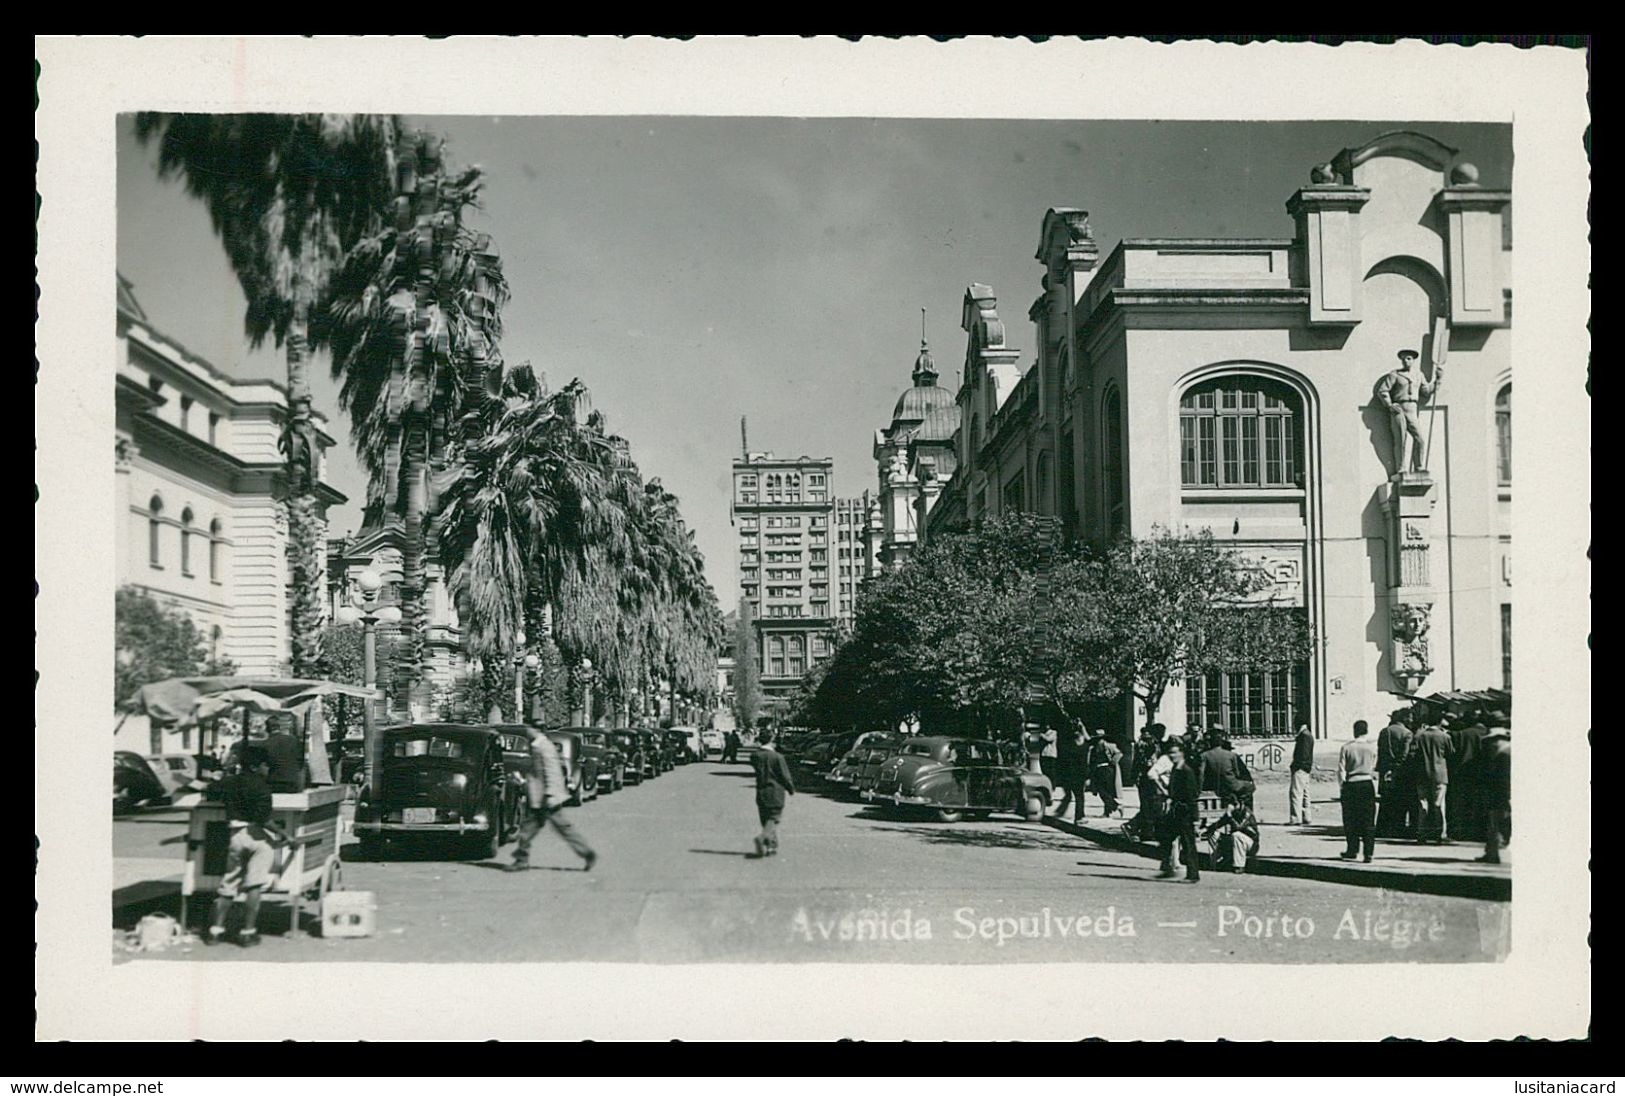 PORTO ALEGRE - Avenida Sepulveda.  Carte Postale - Porto Alegre